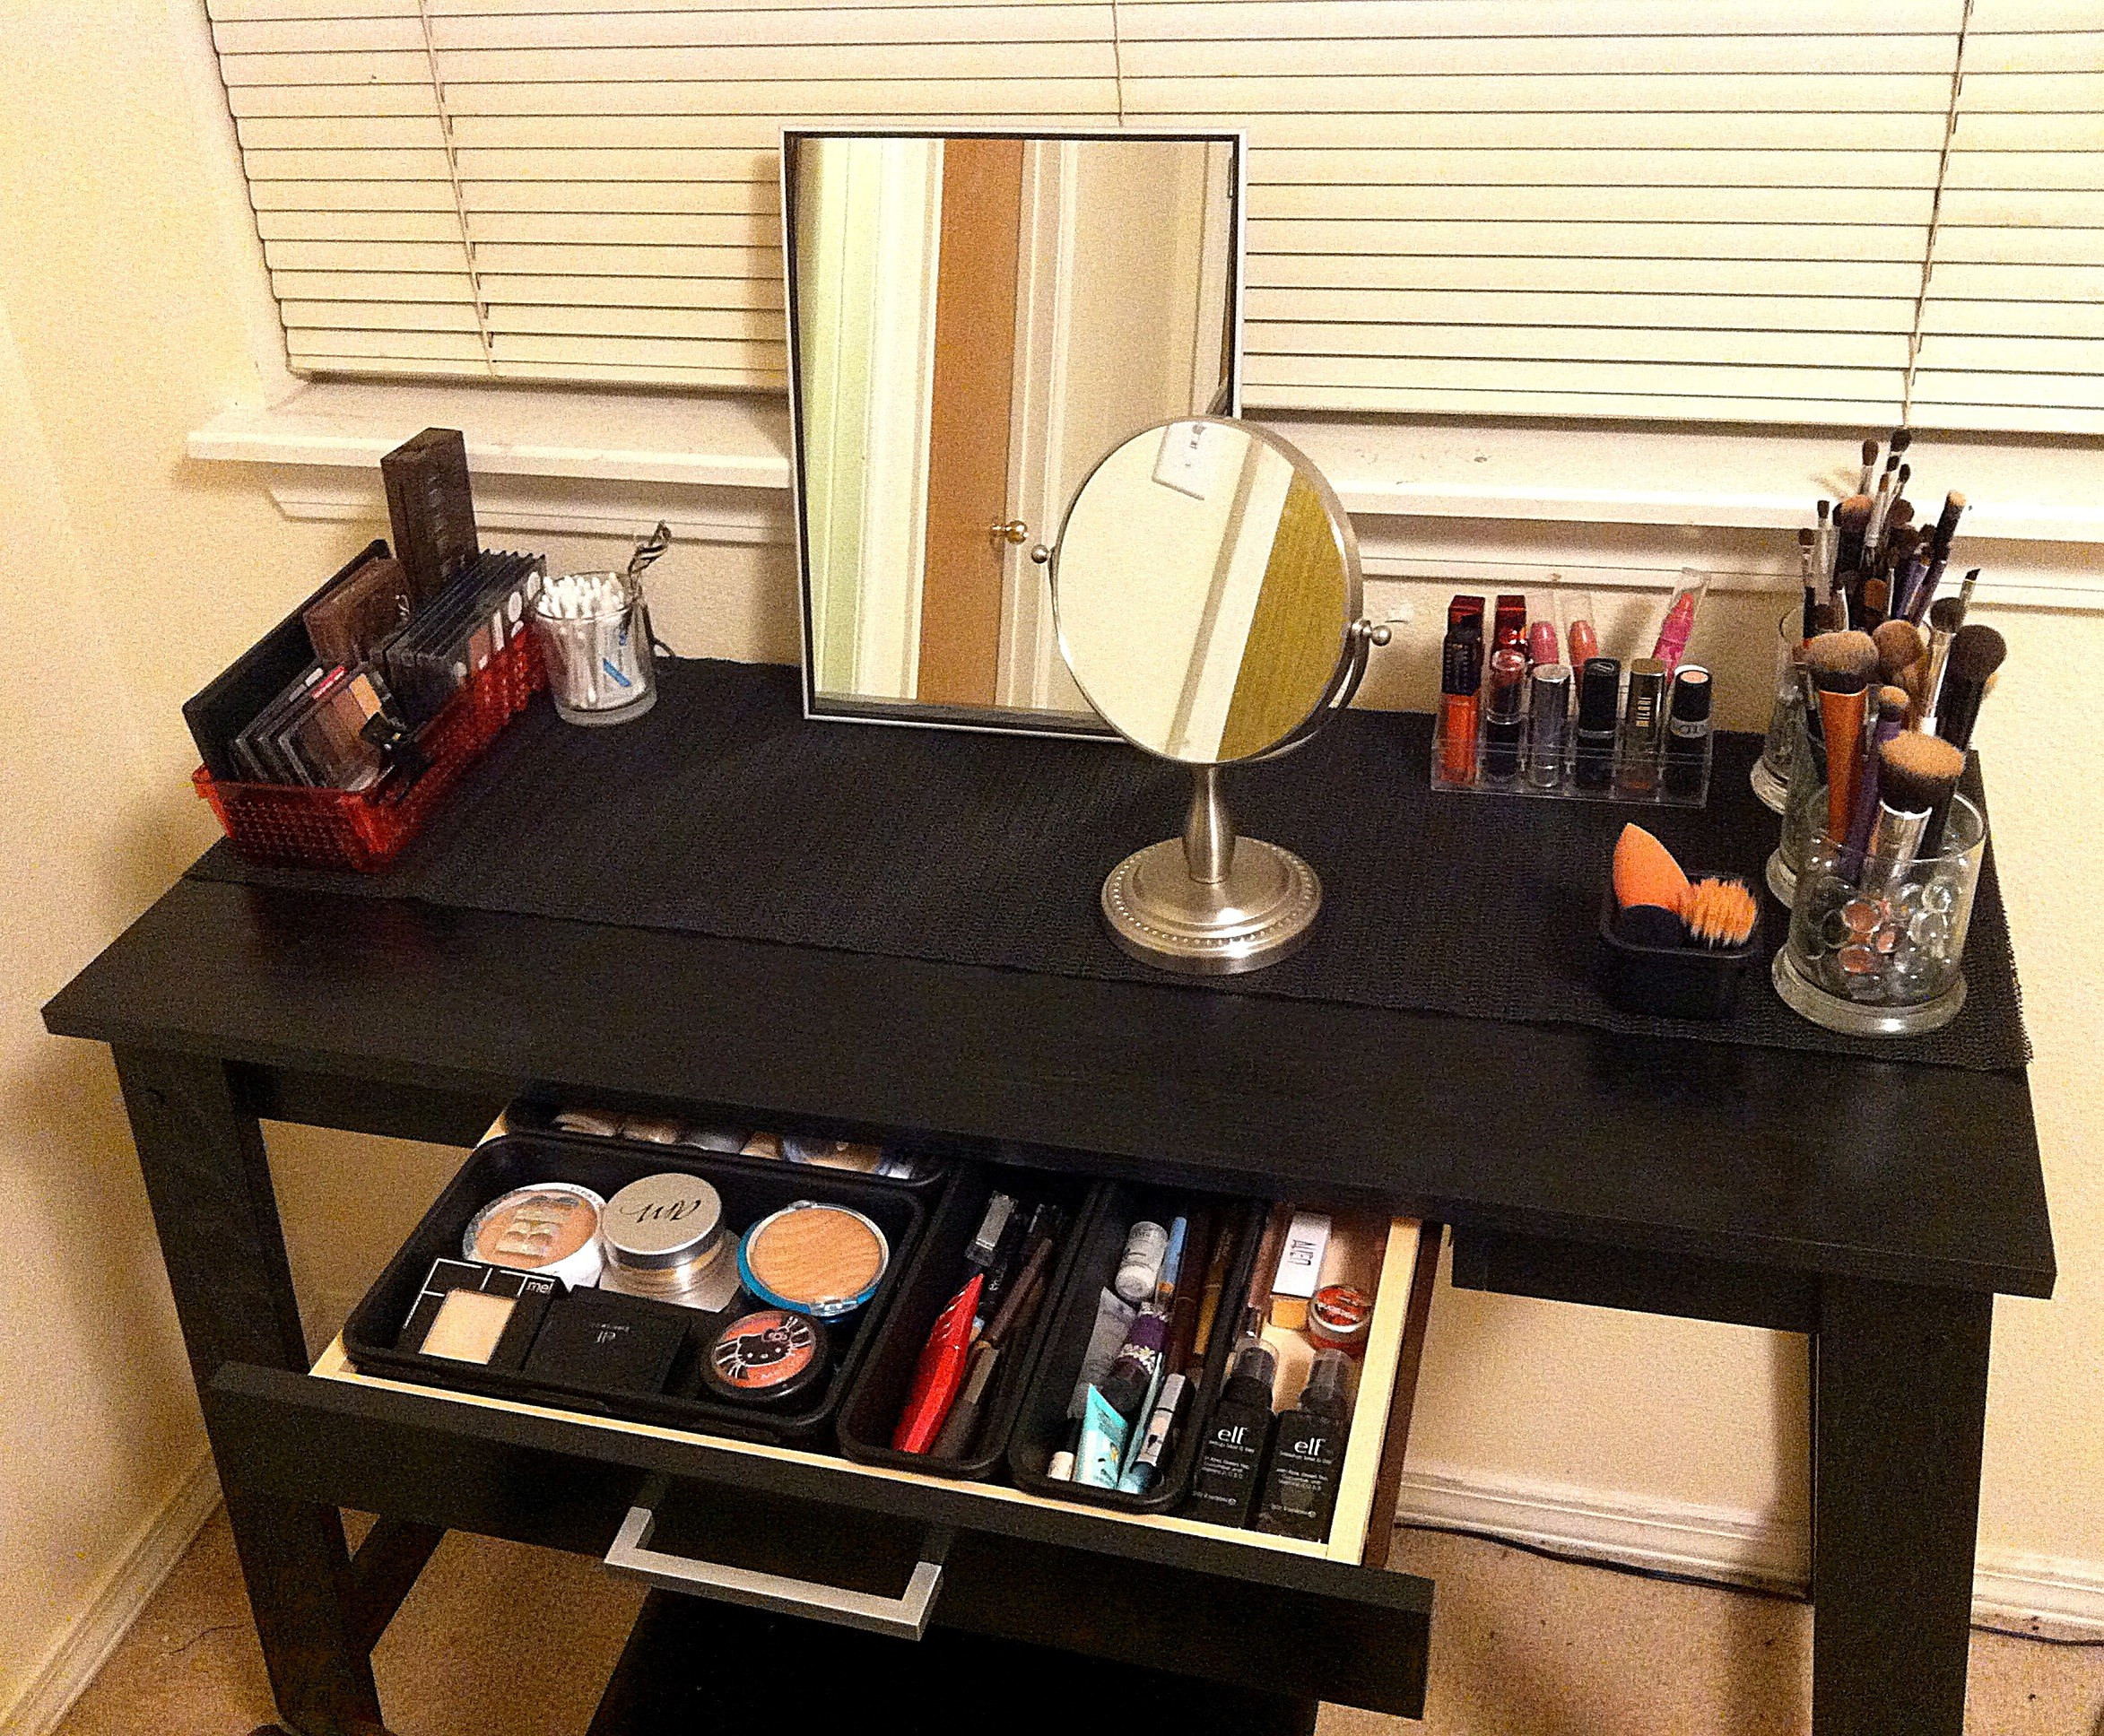 Best ideas about DIY Makeup Desk
. Save or Pin DIY Makeup or Vanity Table Under $100 Maricarl Janah Now.